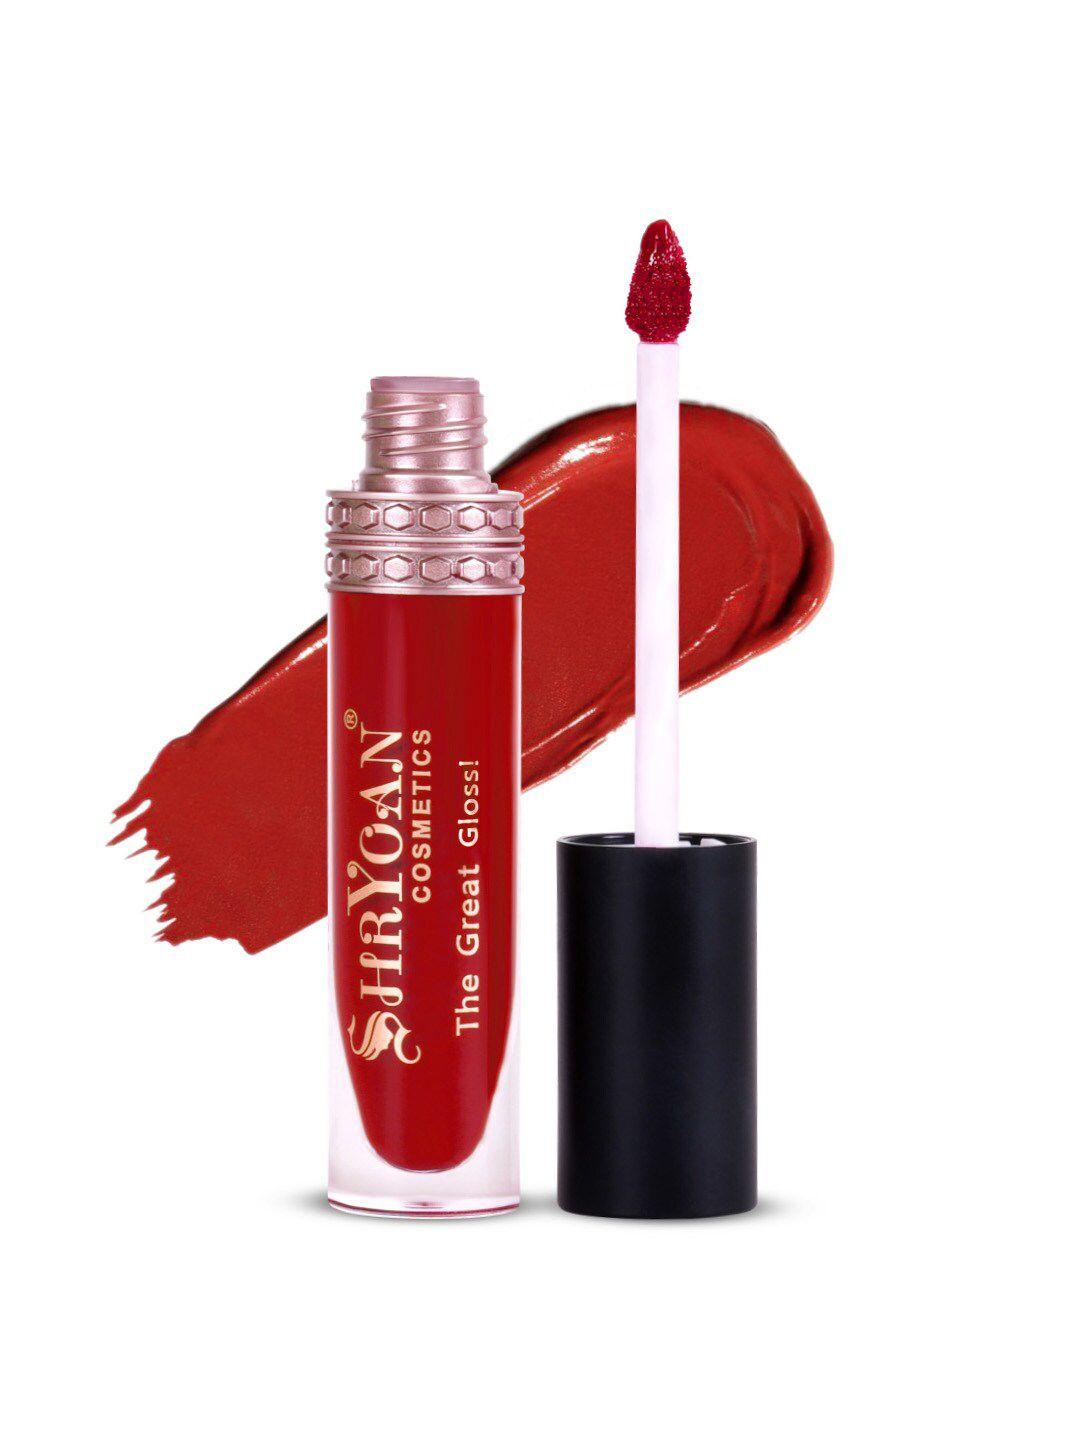 shryoan juicy jelly high shine non stick lightweight lip gloss - 6ml - shade 06